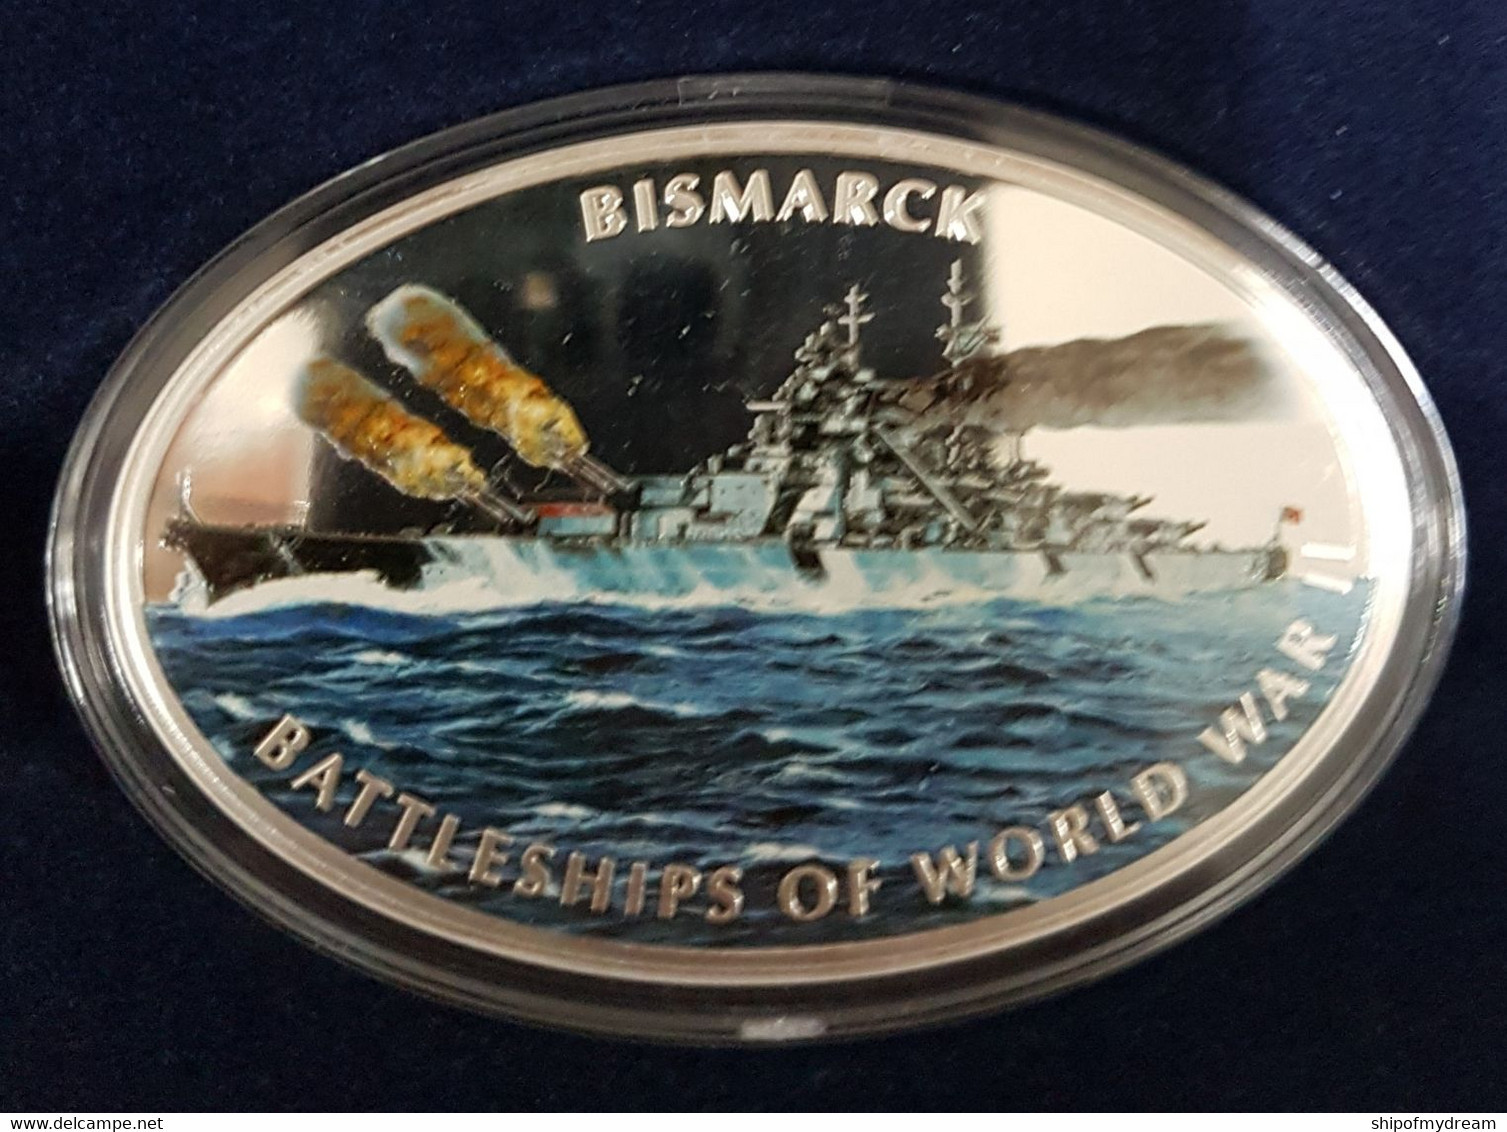 Tokelau 1$ 2013 "Battleships Of World War II" - Bismark. Proof. 2oz. Oval 70x45 Mm. Very Scarce. Mintage = 3000. - Autres – Océanie